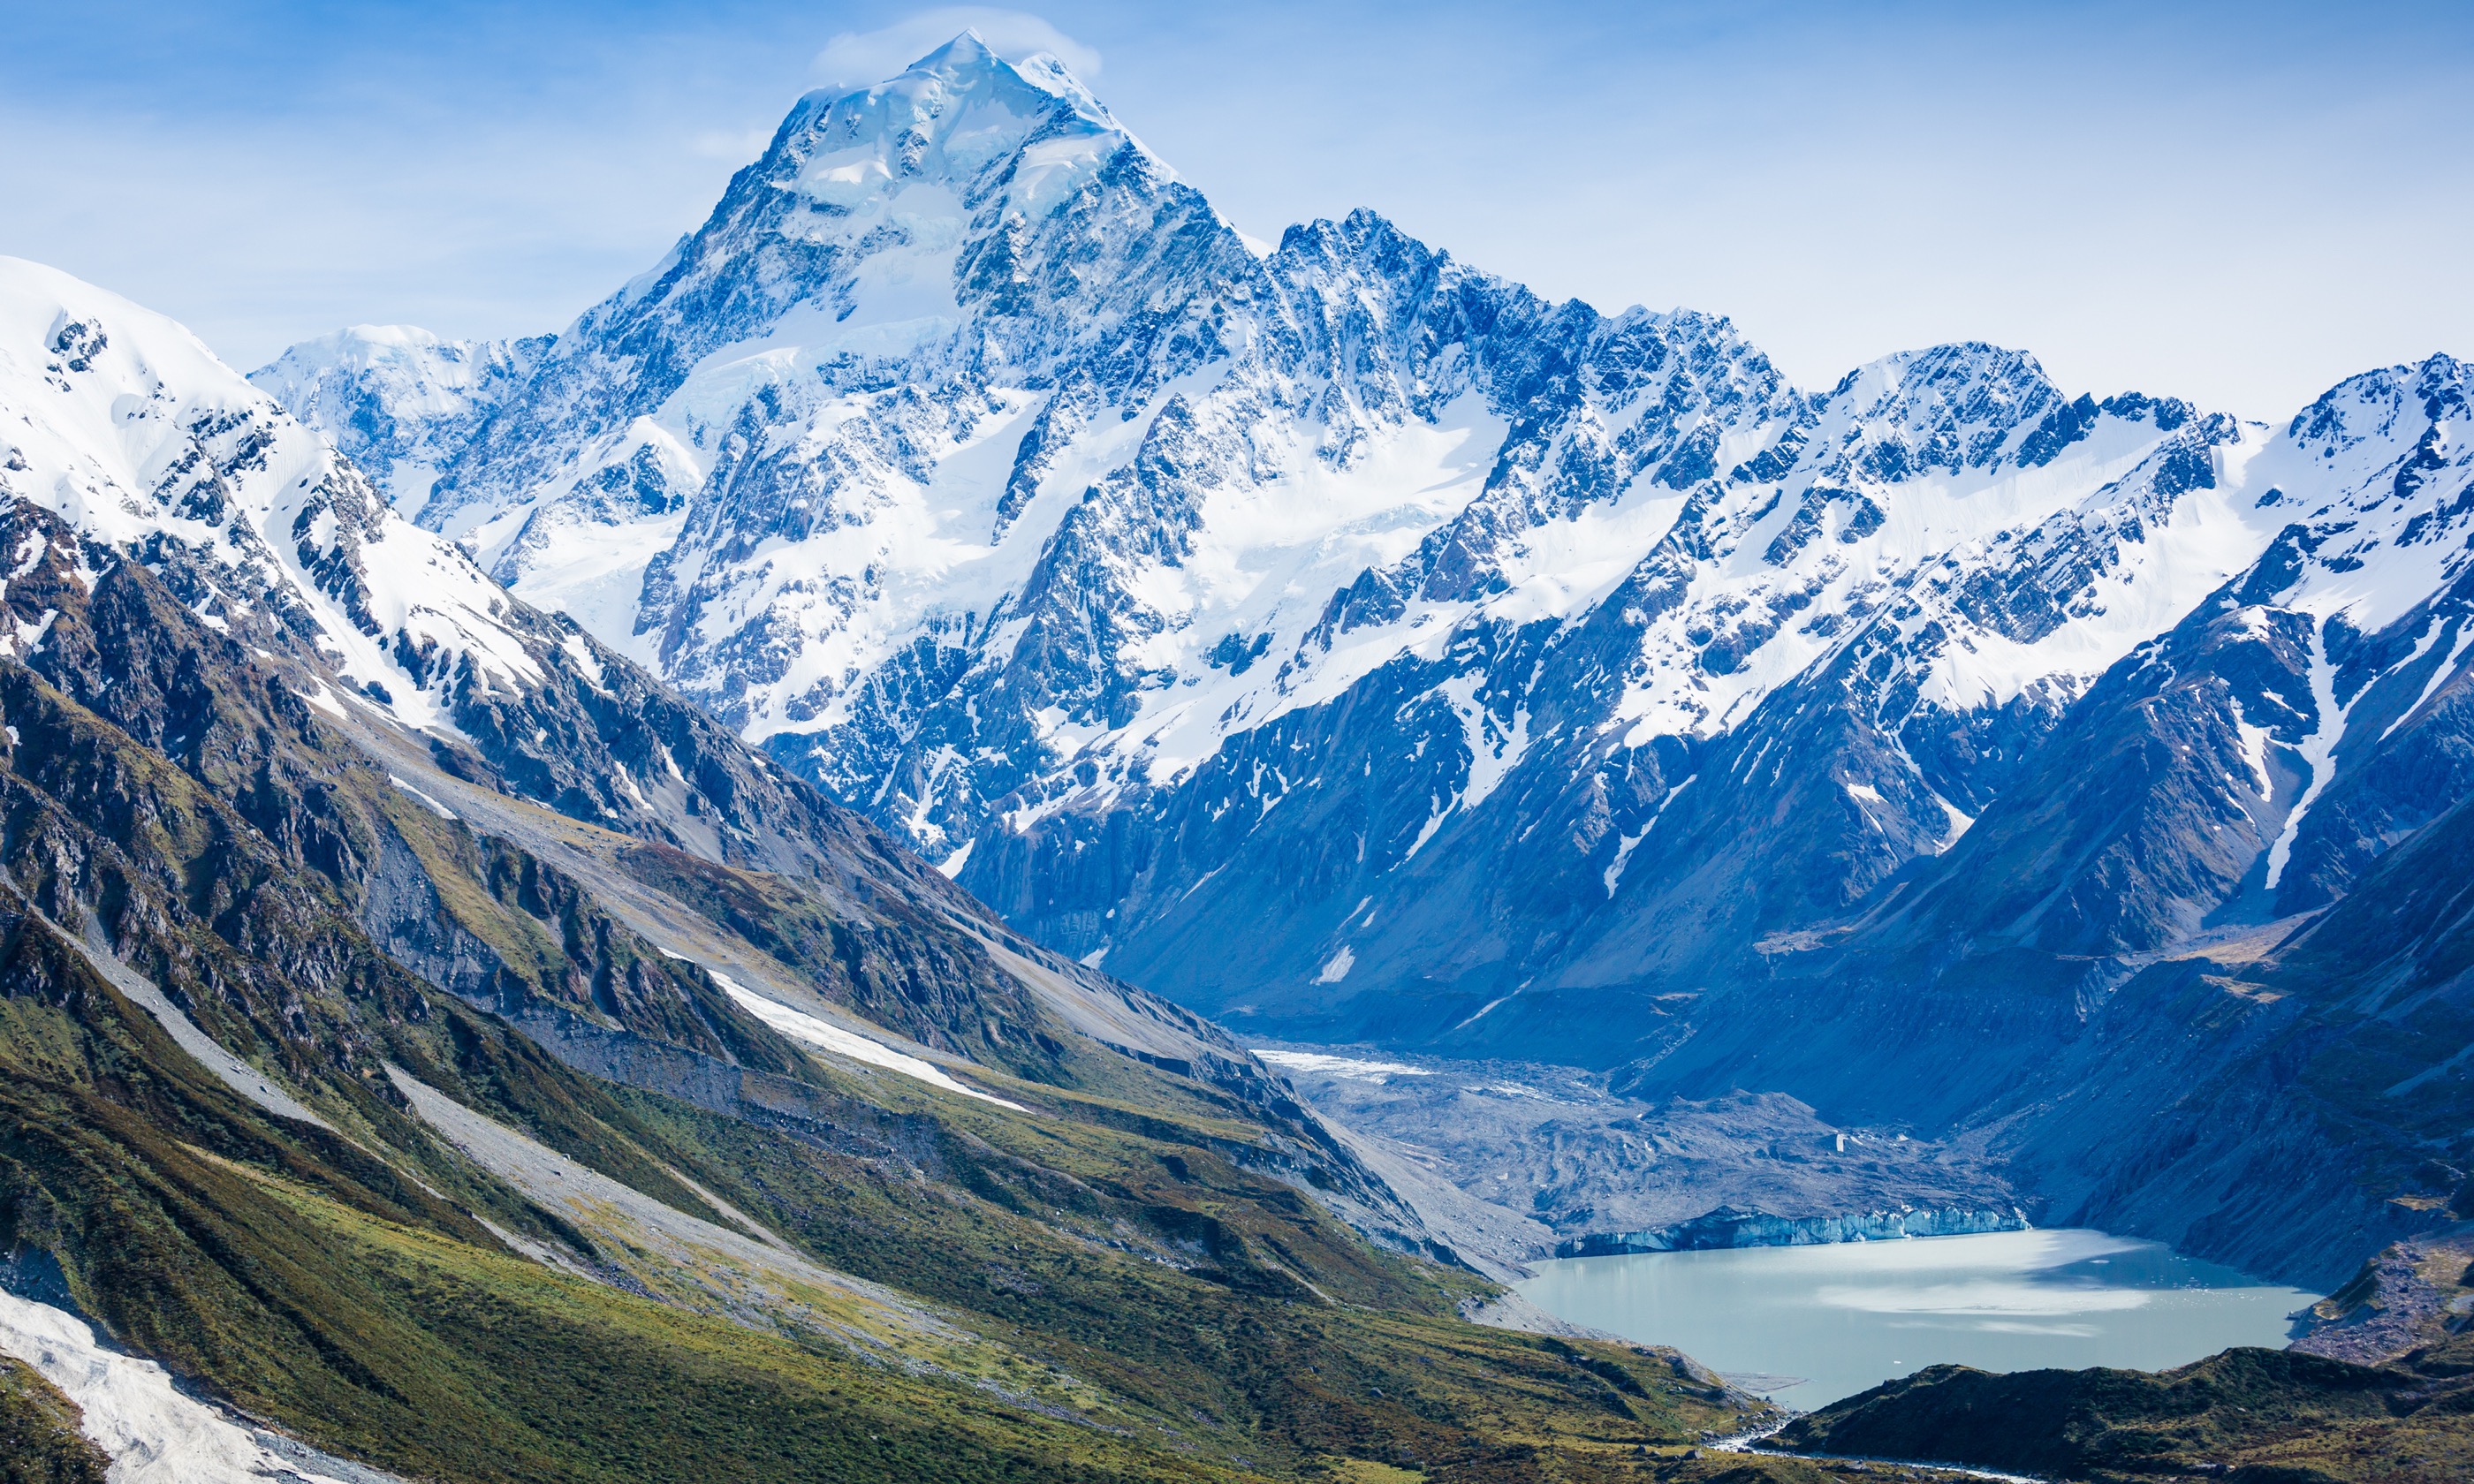 Mount Cook, New Zealand (Shutterstock.com)